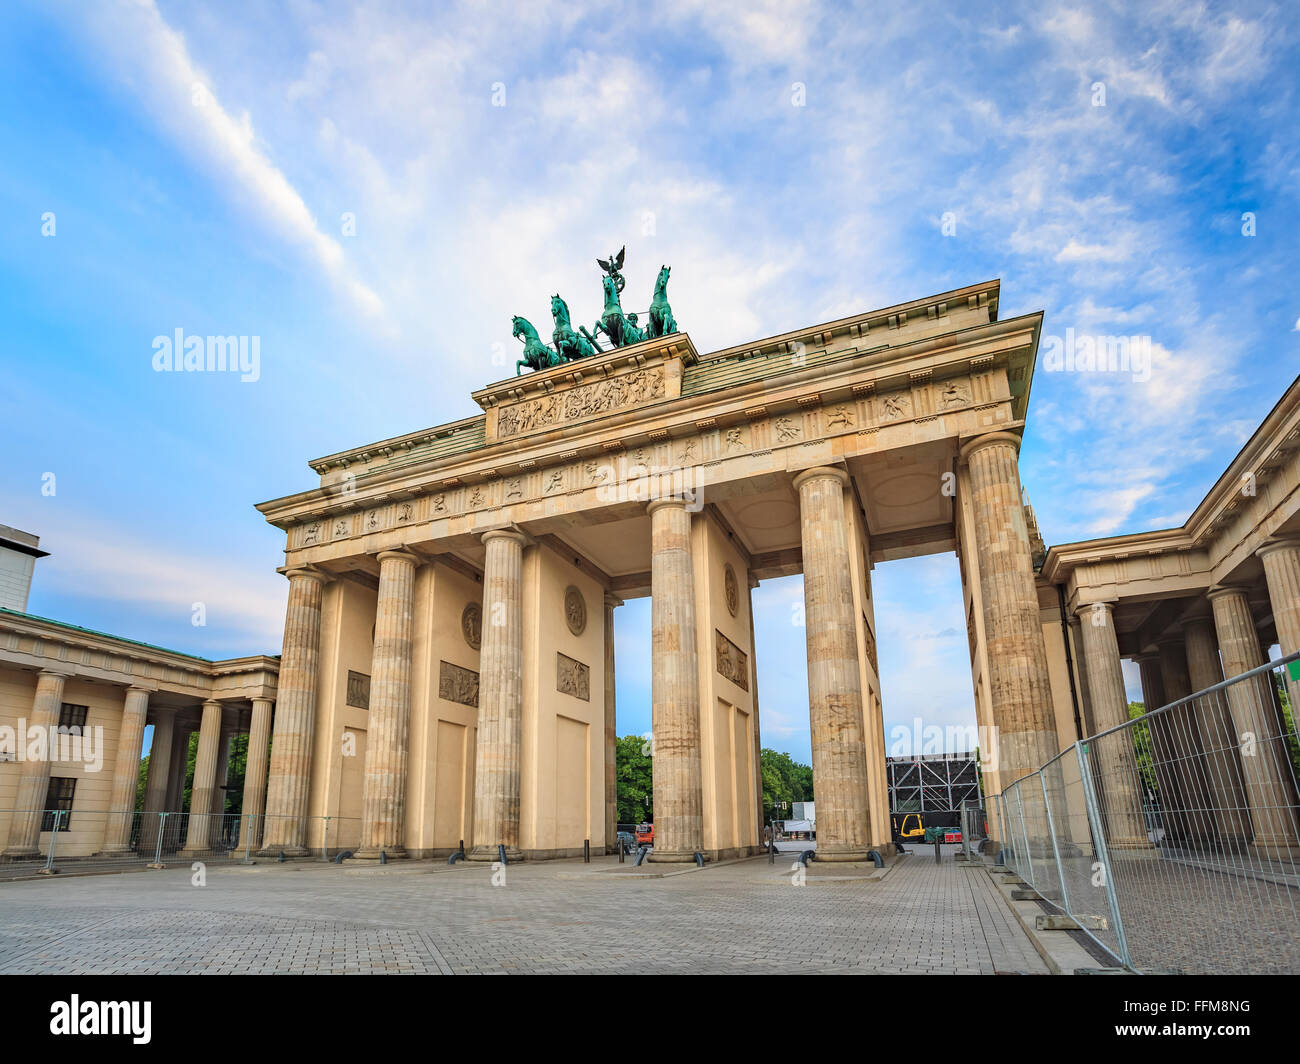 Porta di Brandeburgo - Berlin - Germania Foto Stock